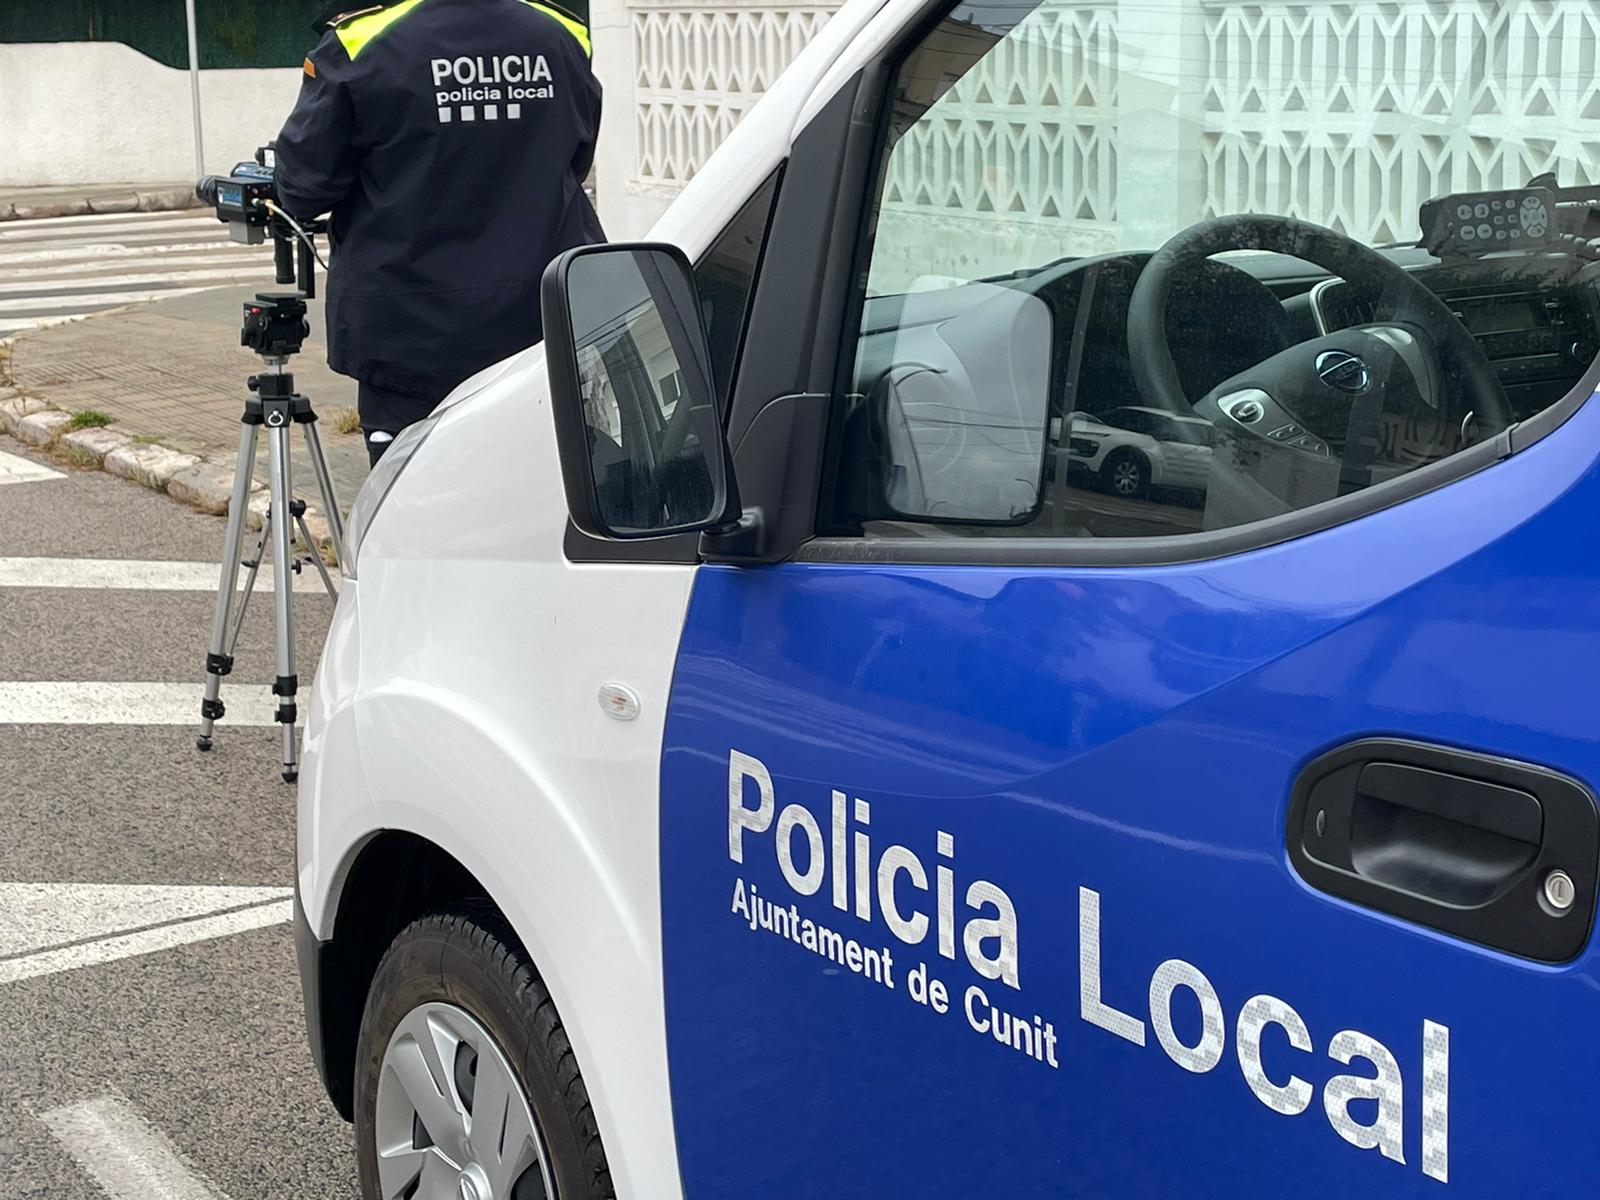 Read more about the article La policia local de Cunit participa un any més al projecte “Abaco” del Defensor del Pueblo